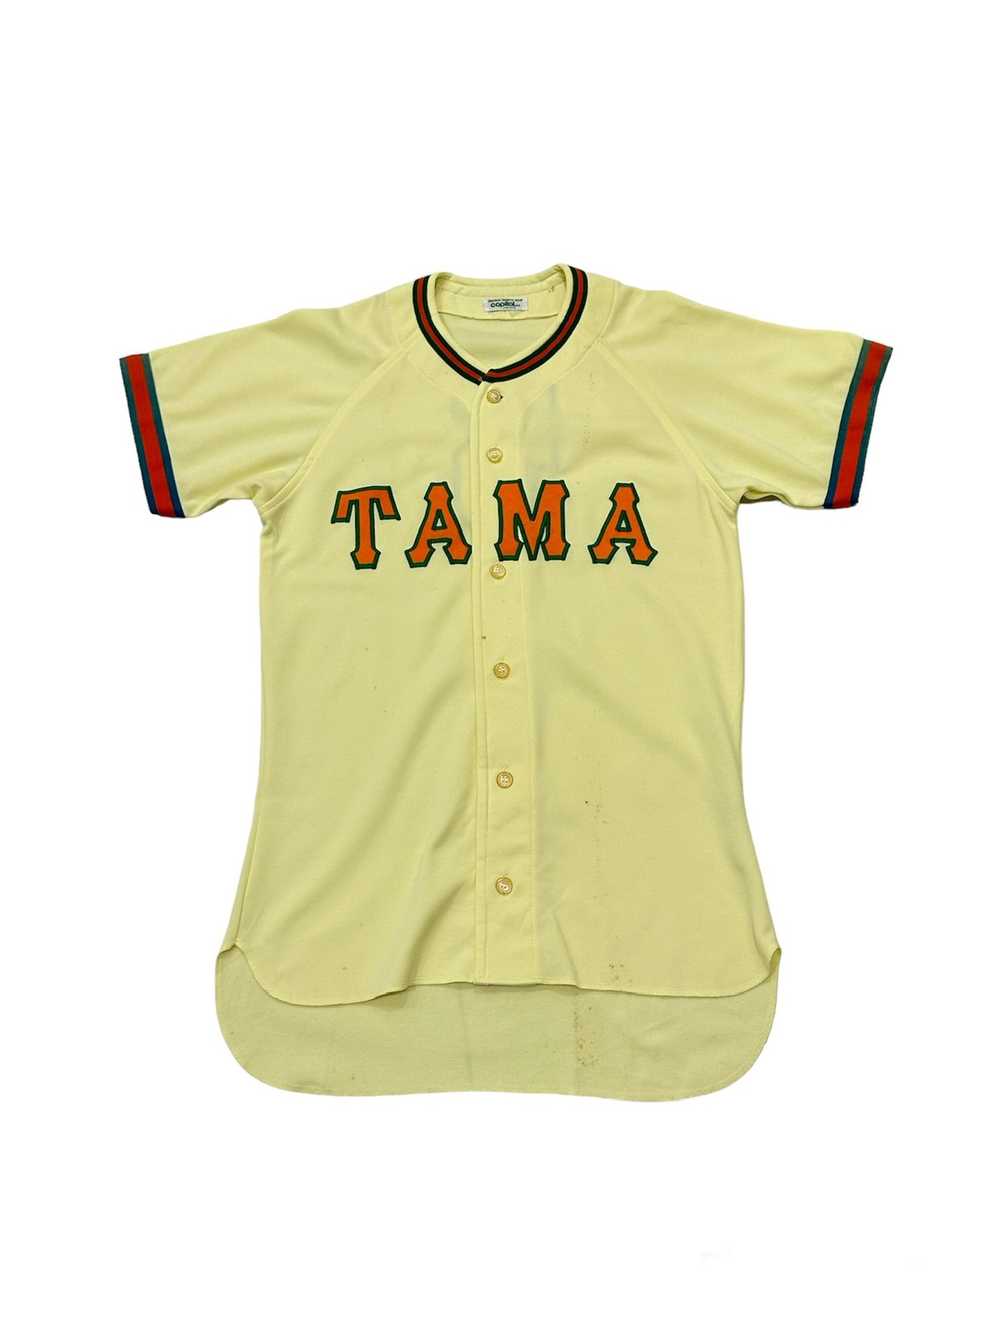 Vintage - Vintage TAMA Baseball Jersey - image 1